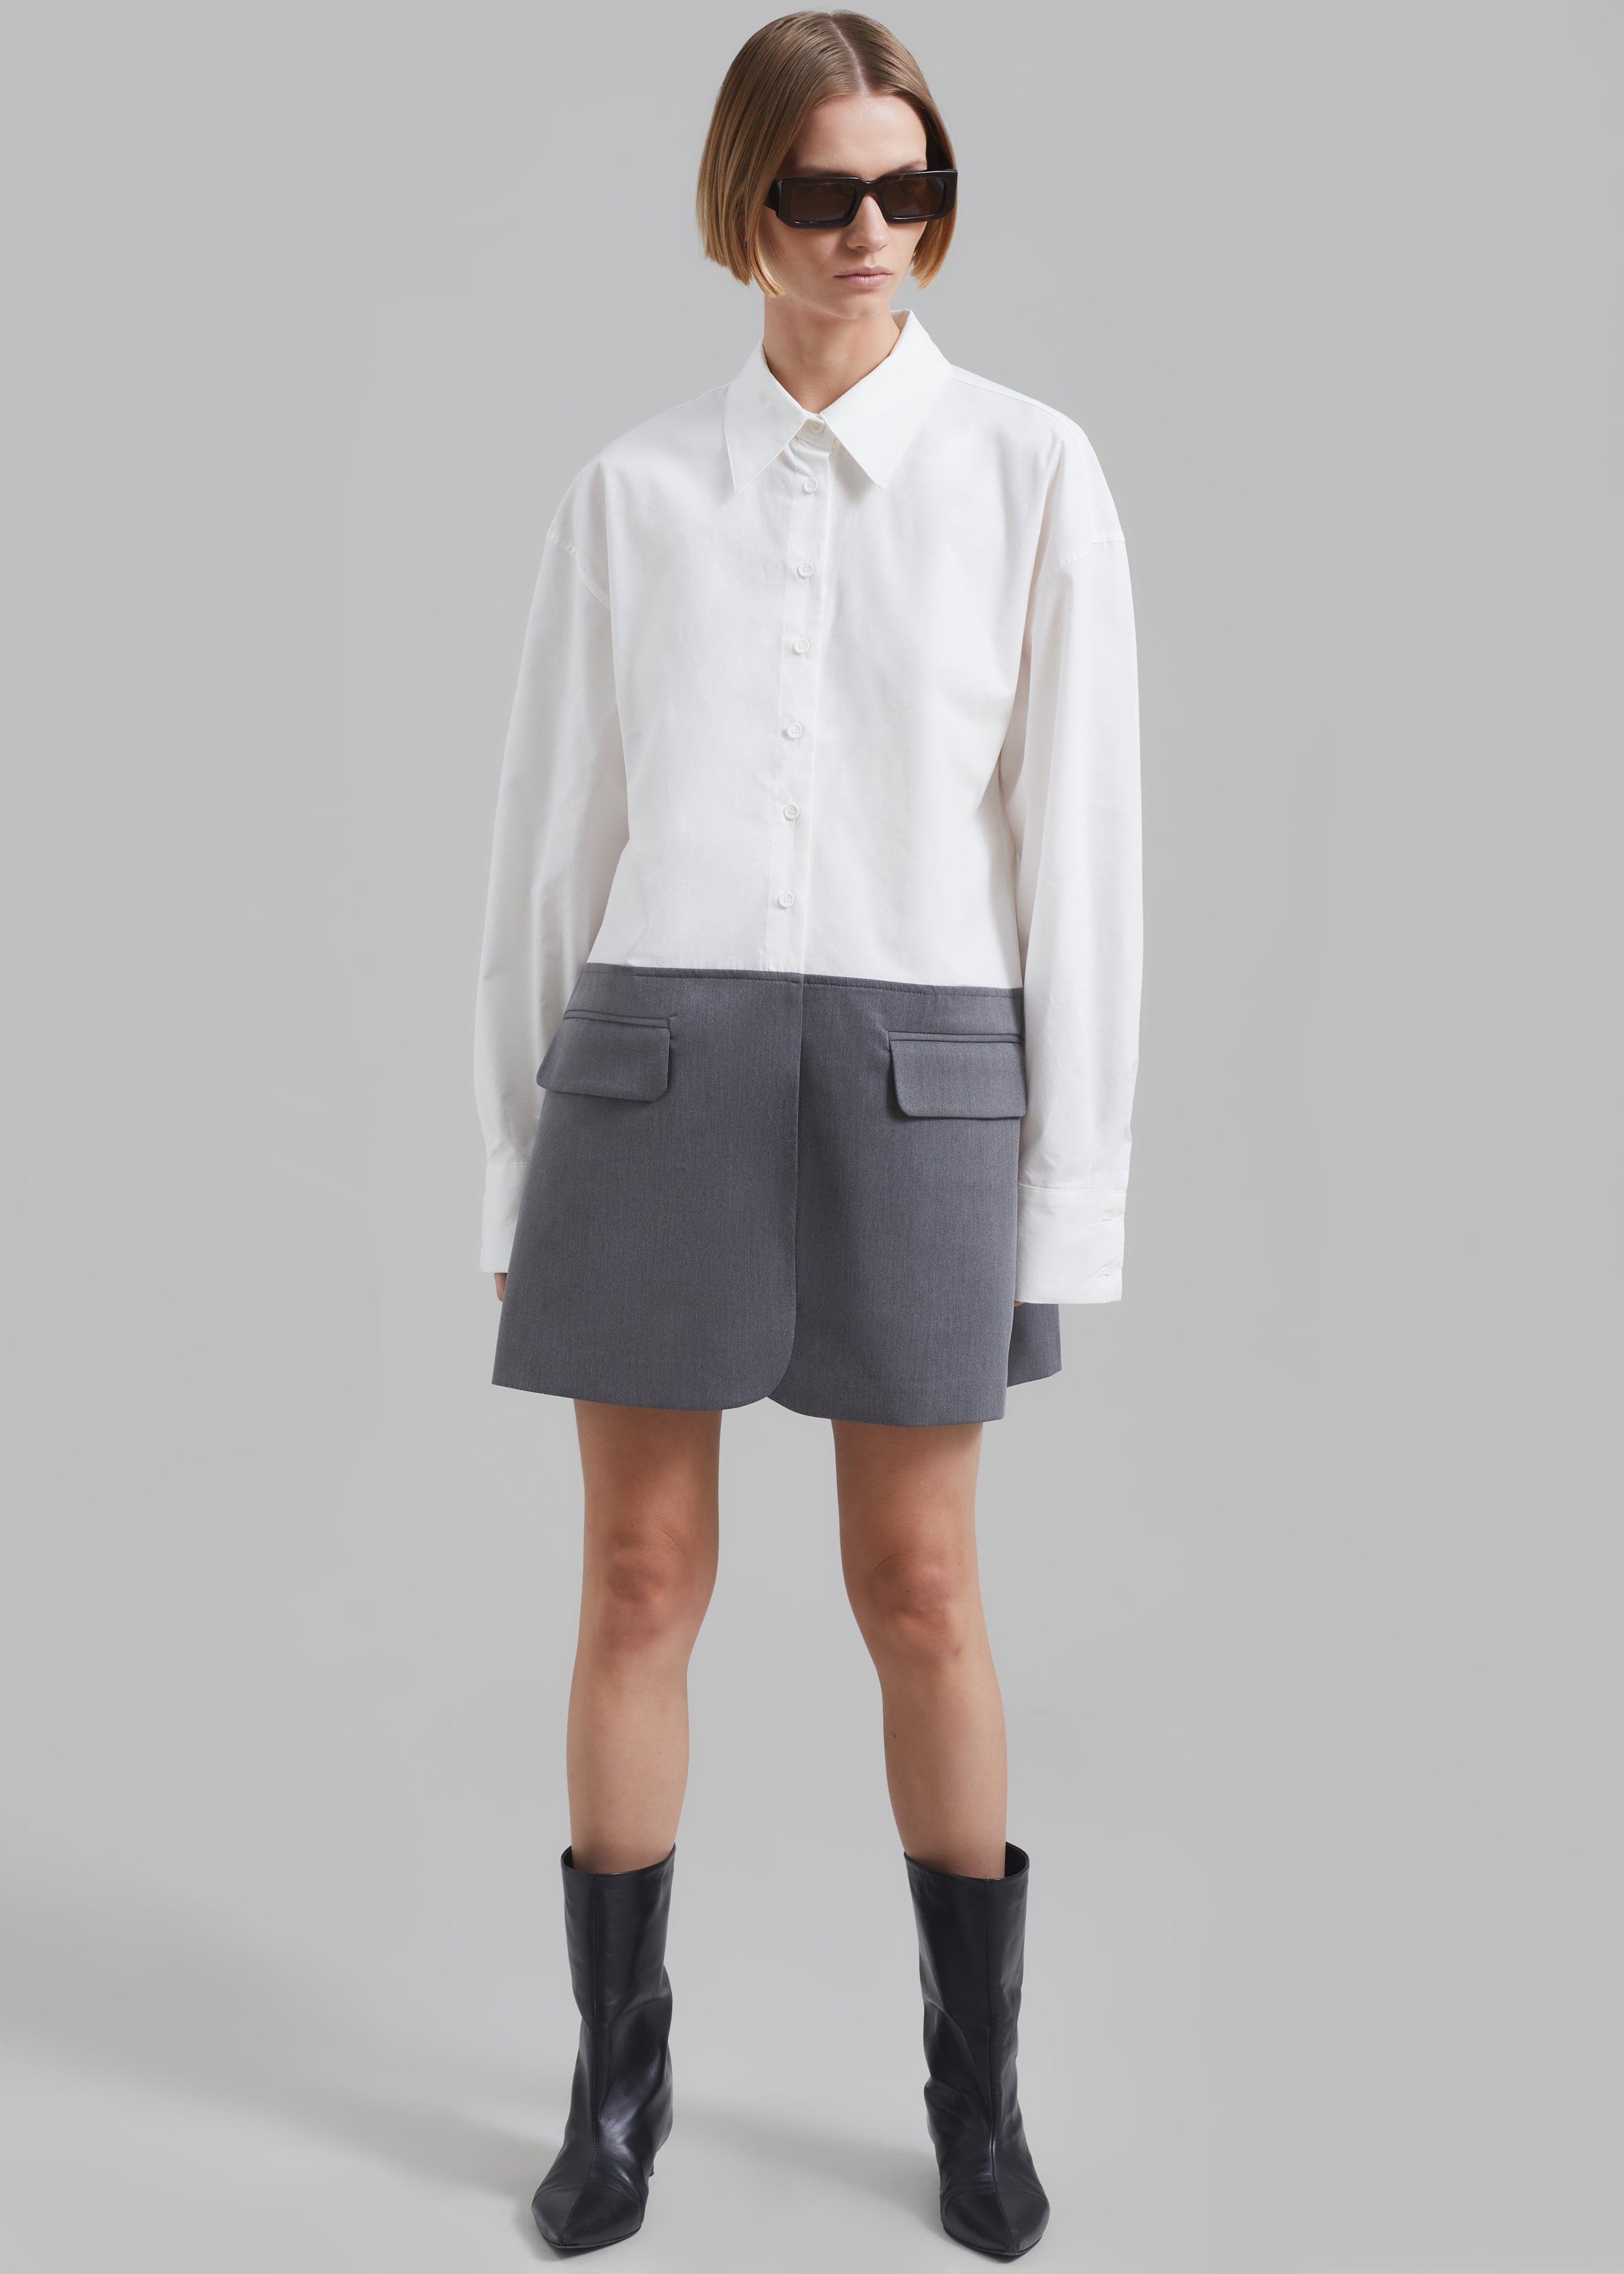 Marissa Shirt Dress - White/Grey - 4